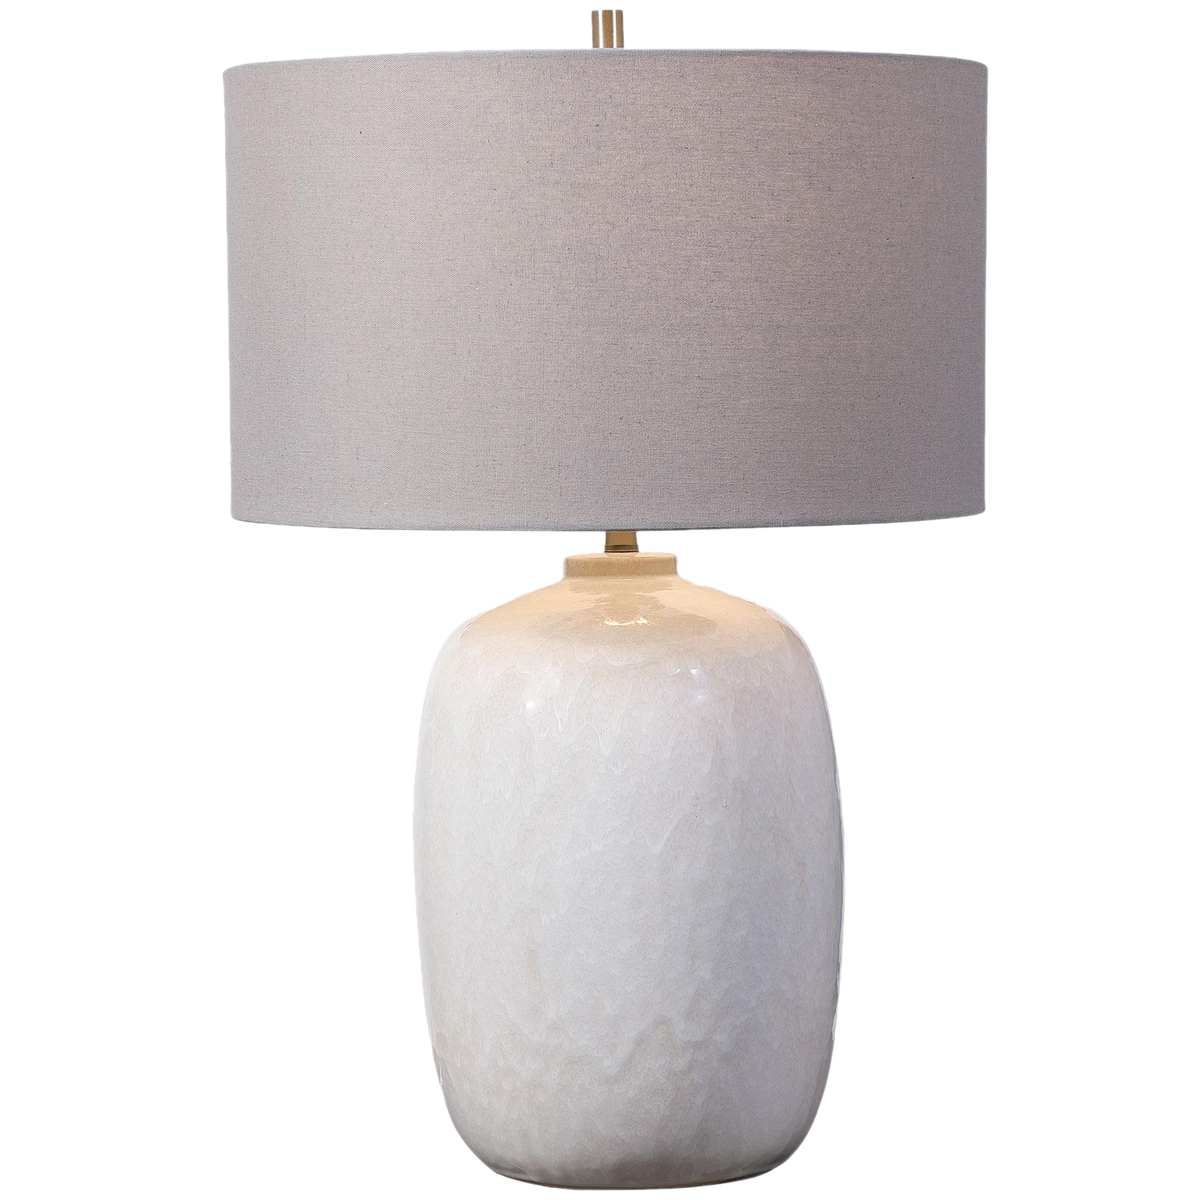 Winterscape Ceramic Table Lamp